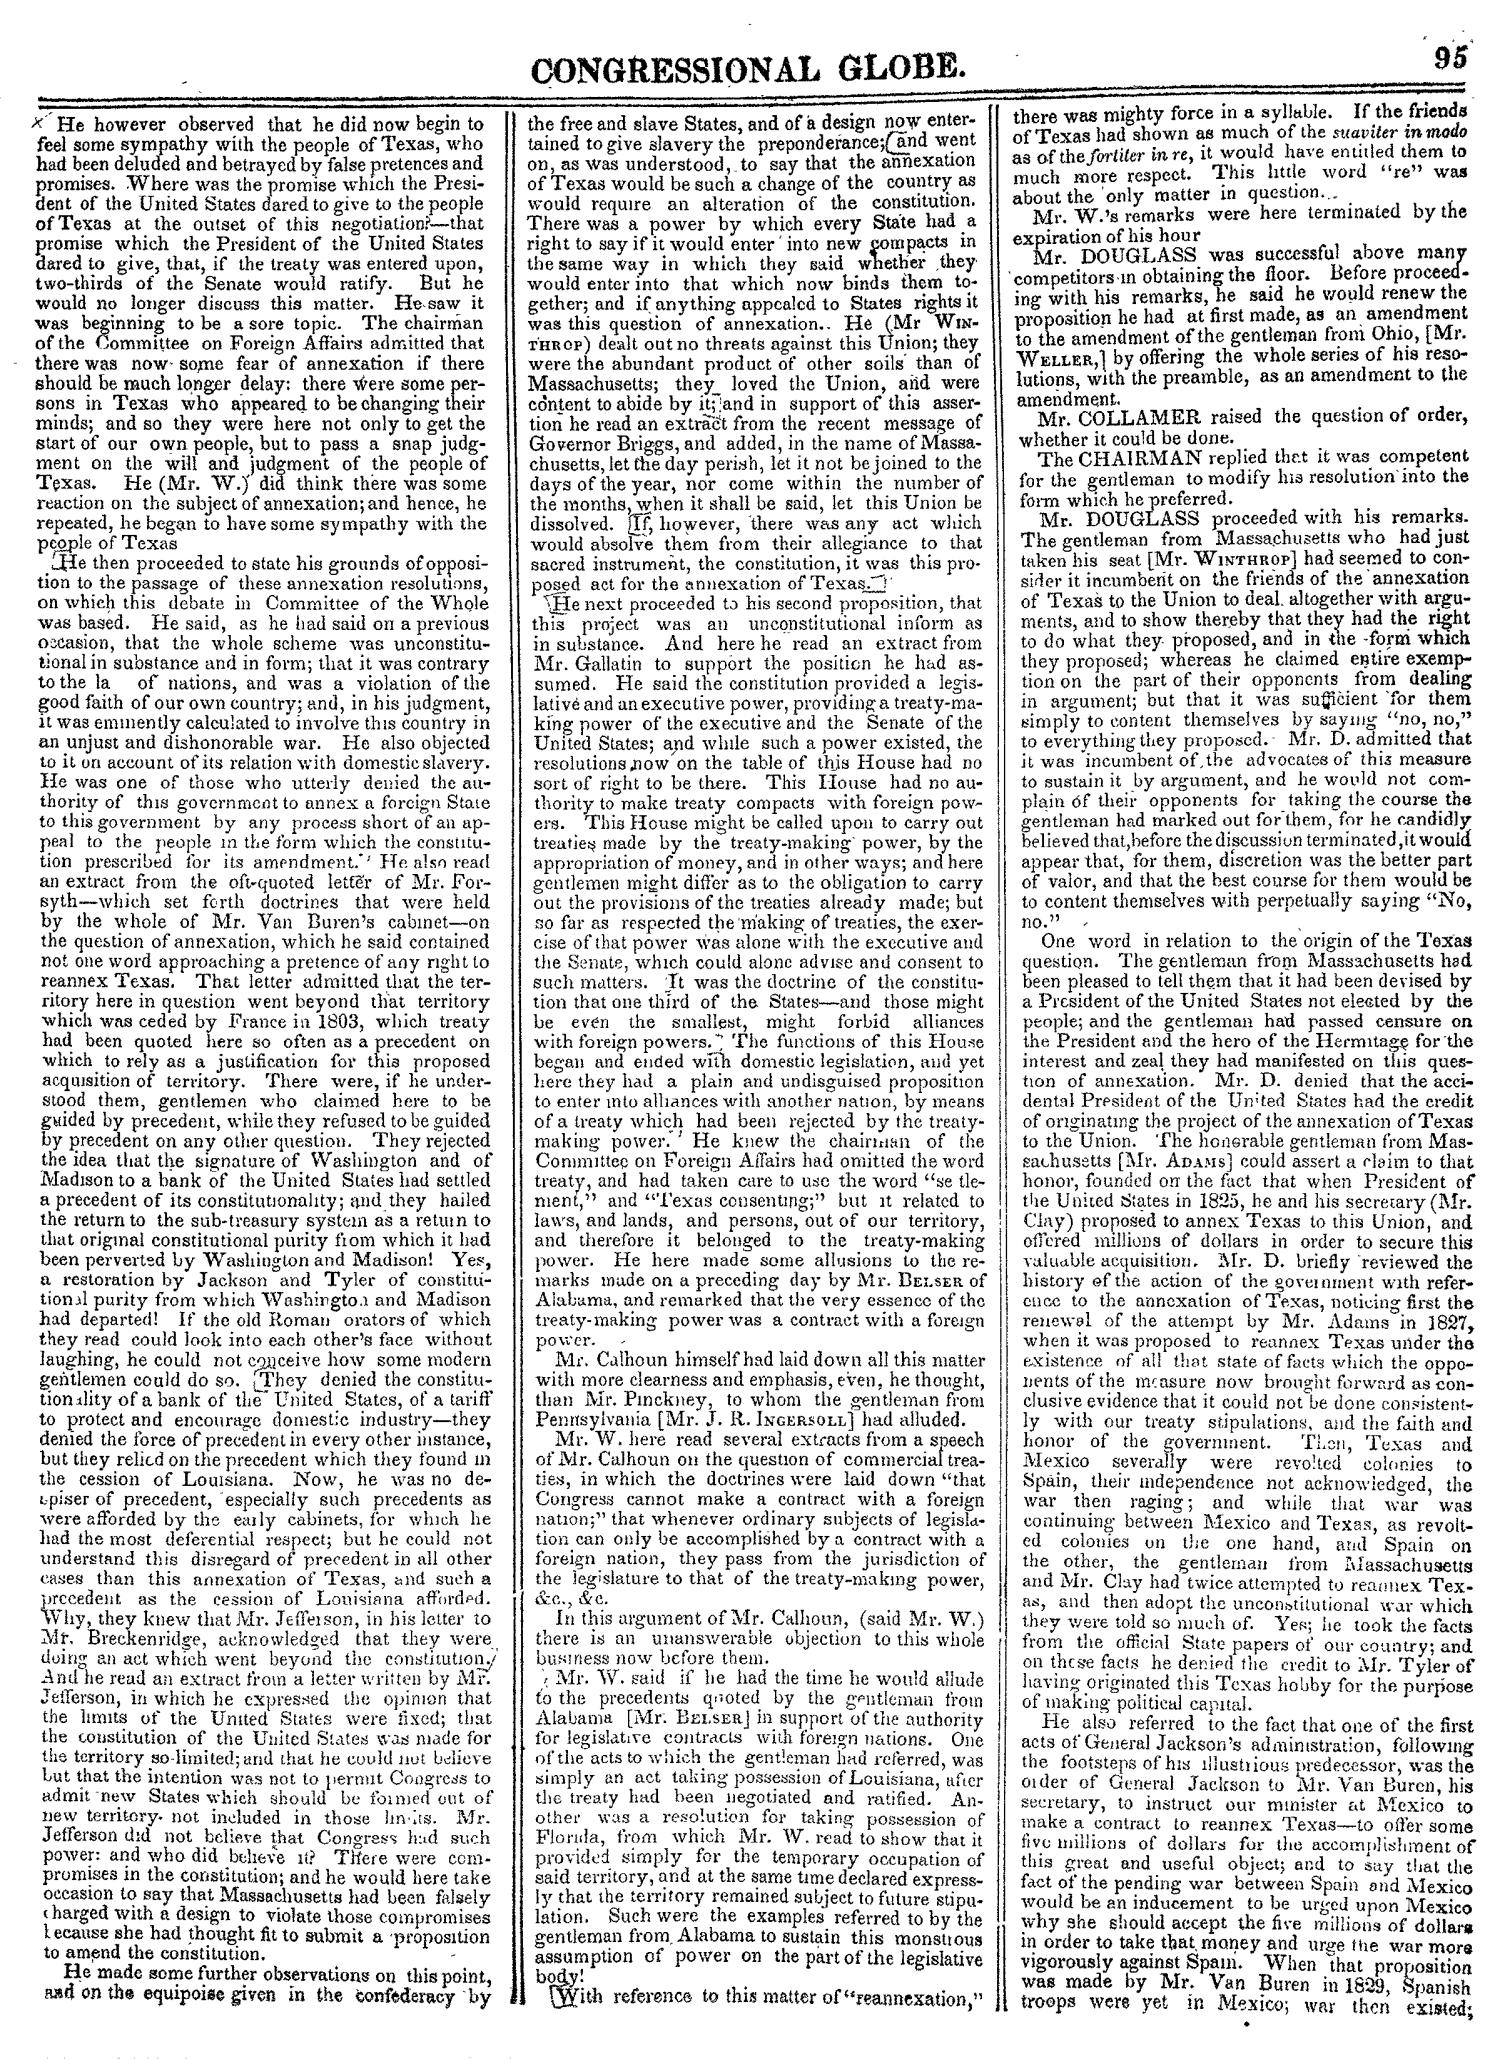 The Congressional Globe, Volume 14: Twenty-Eighth Congress, Second Session
                                                
                                                    95
                                                